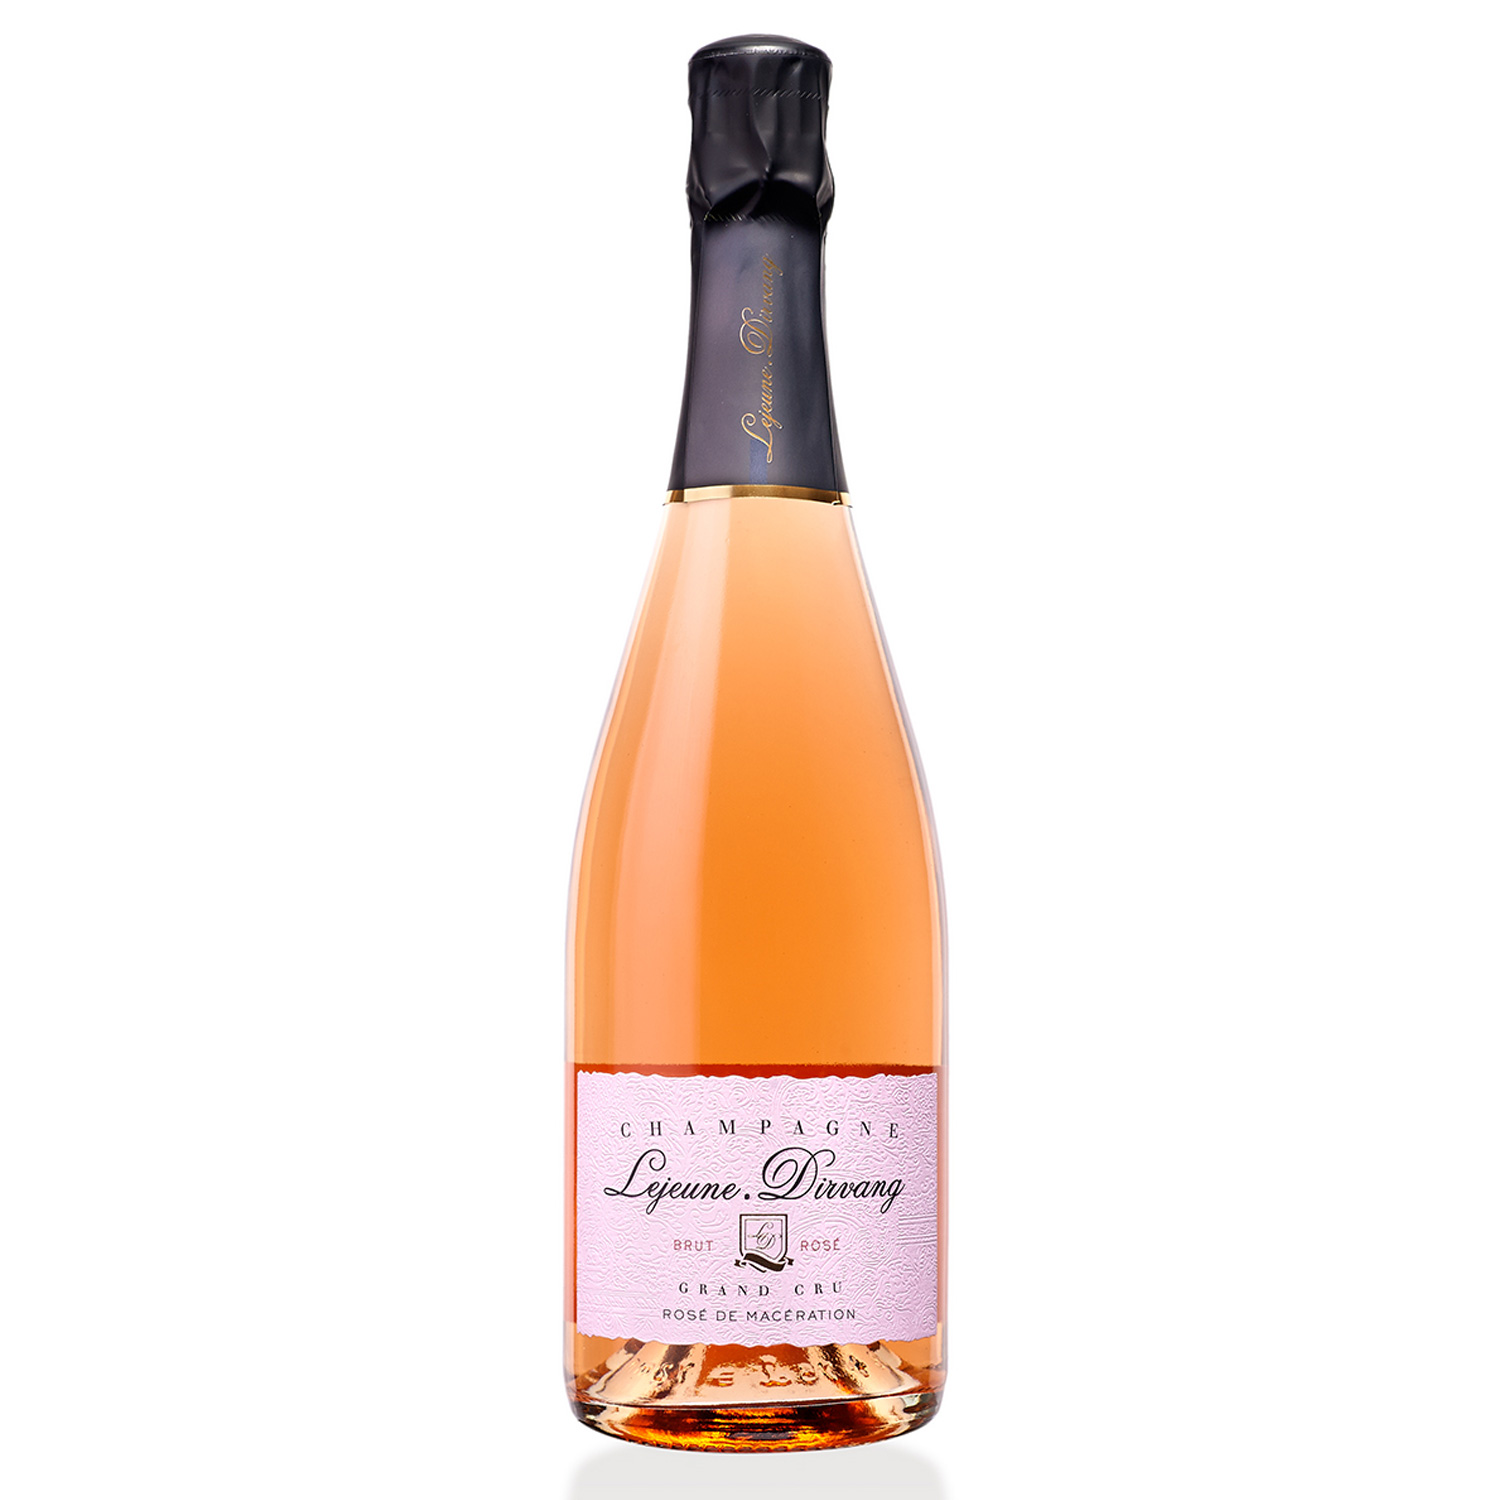 Champagne Lejeune-Dirvang: Rosé Les Hauts Barceaux - Grand Cru